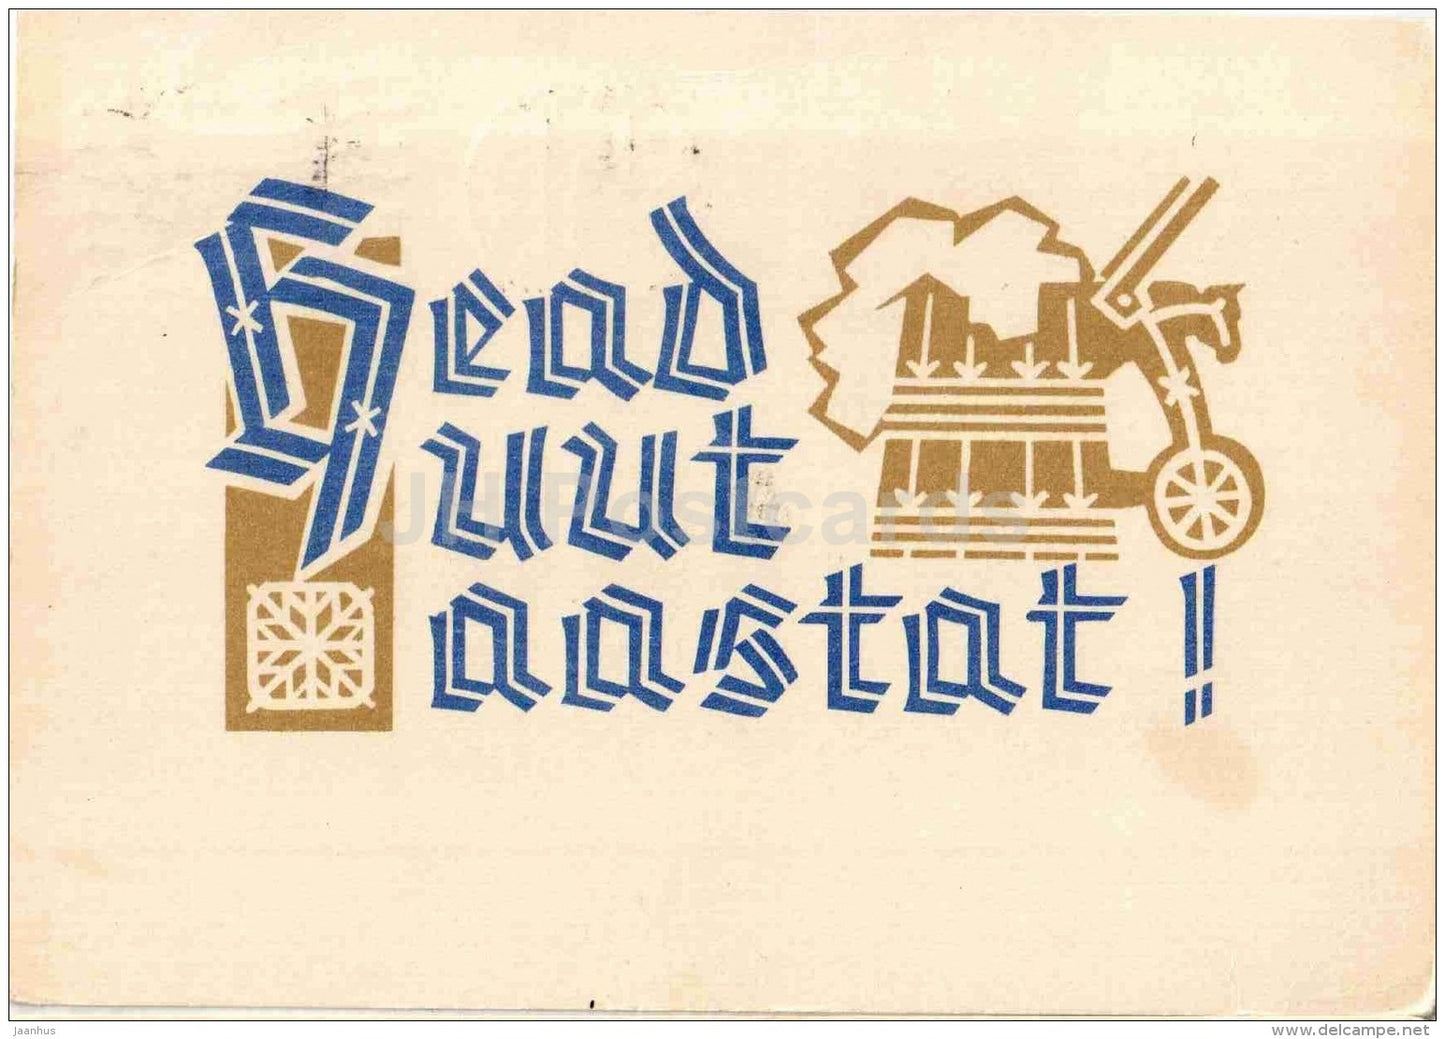 New Year greeting Card by H. Heinla - Beer Mug - illustration - 1966 - Estonia USSR - used - JH Postcards